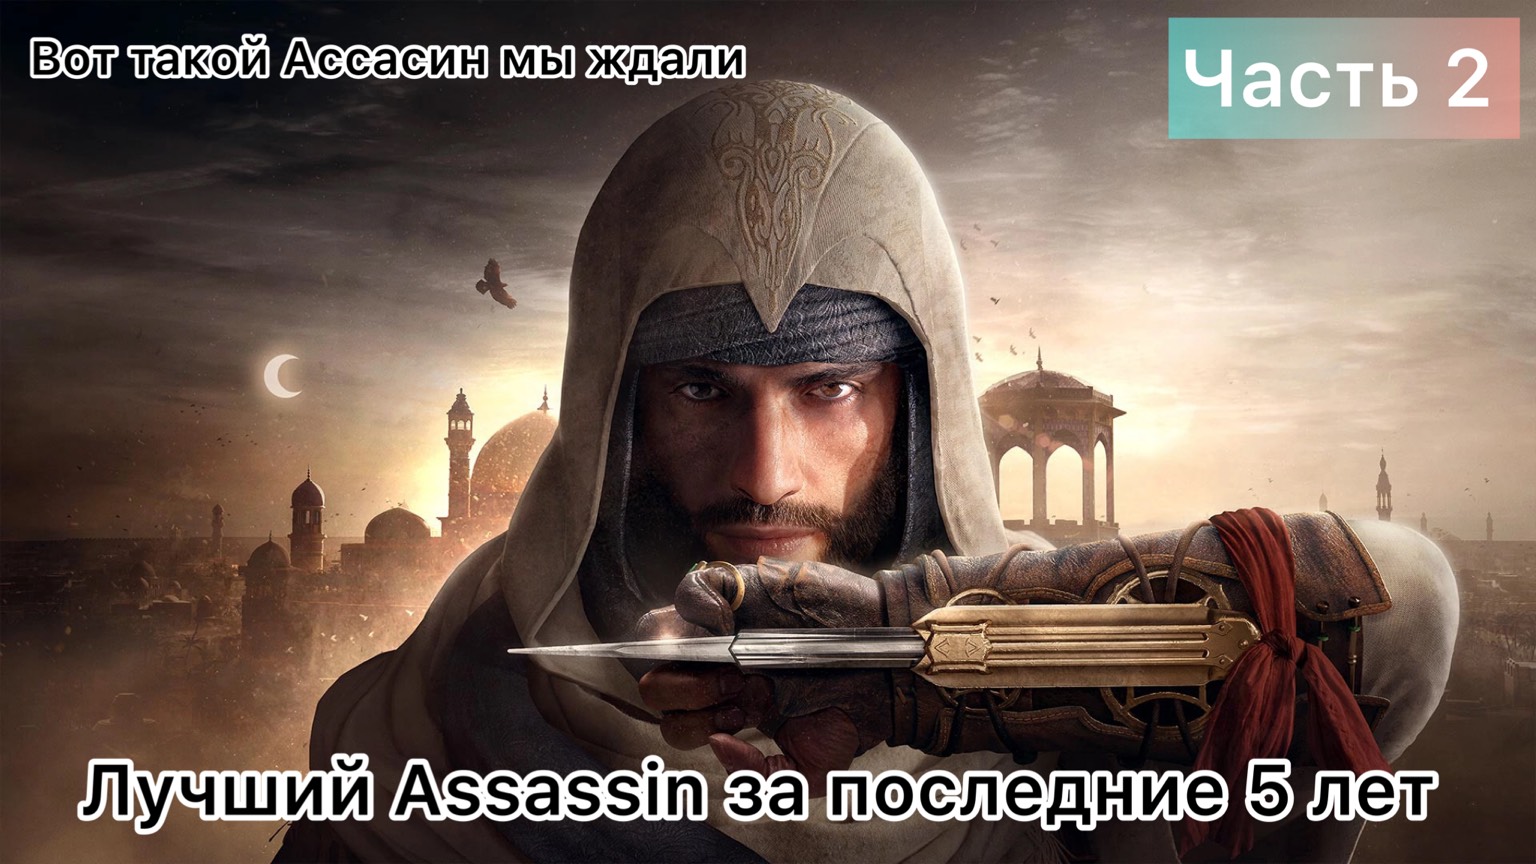 Assassin’s Creed Mirage "Побег из Шоушенка" - 2 часть